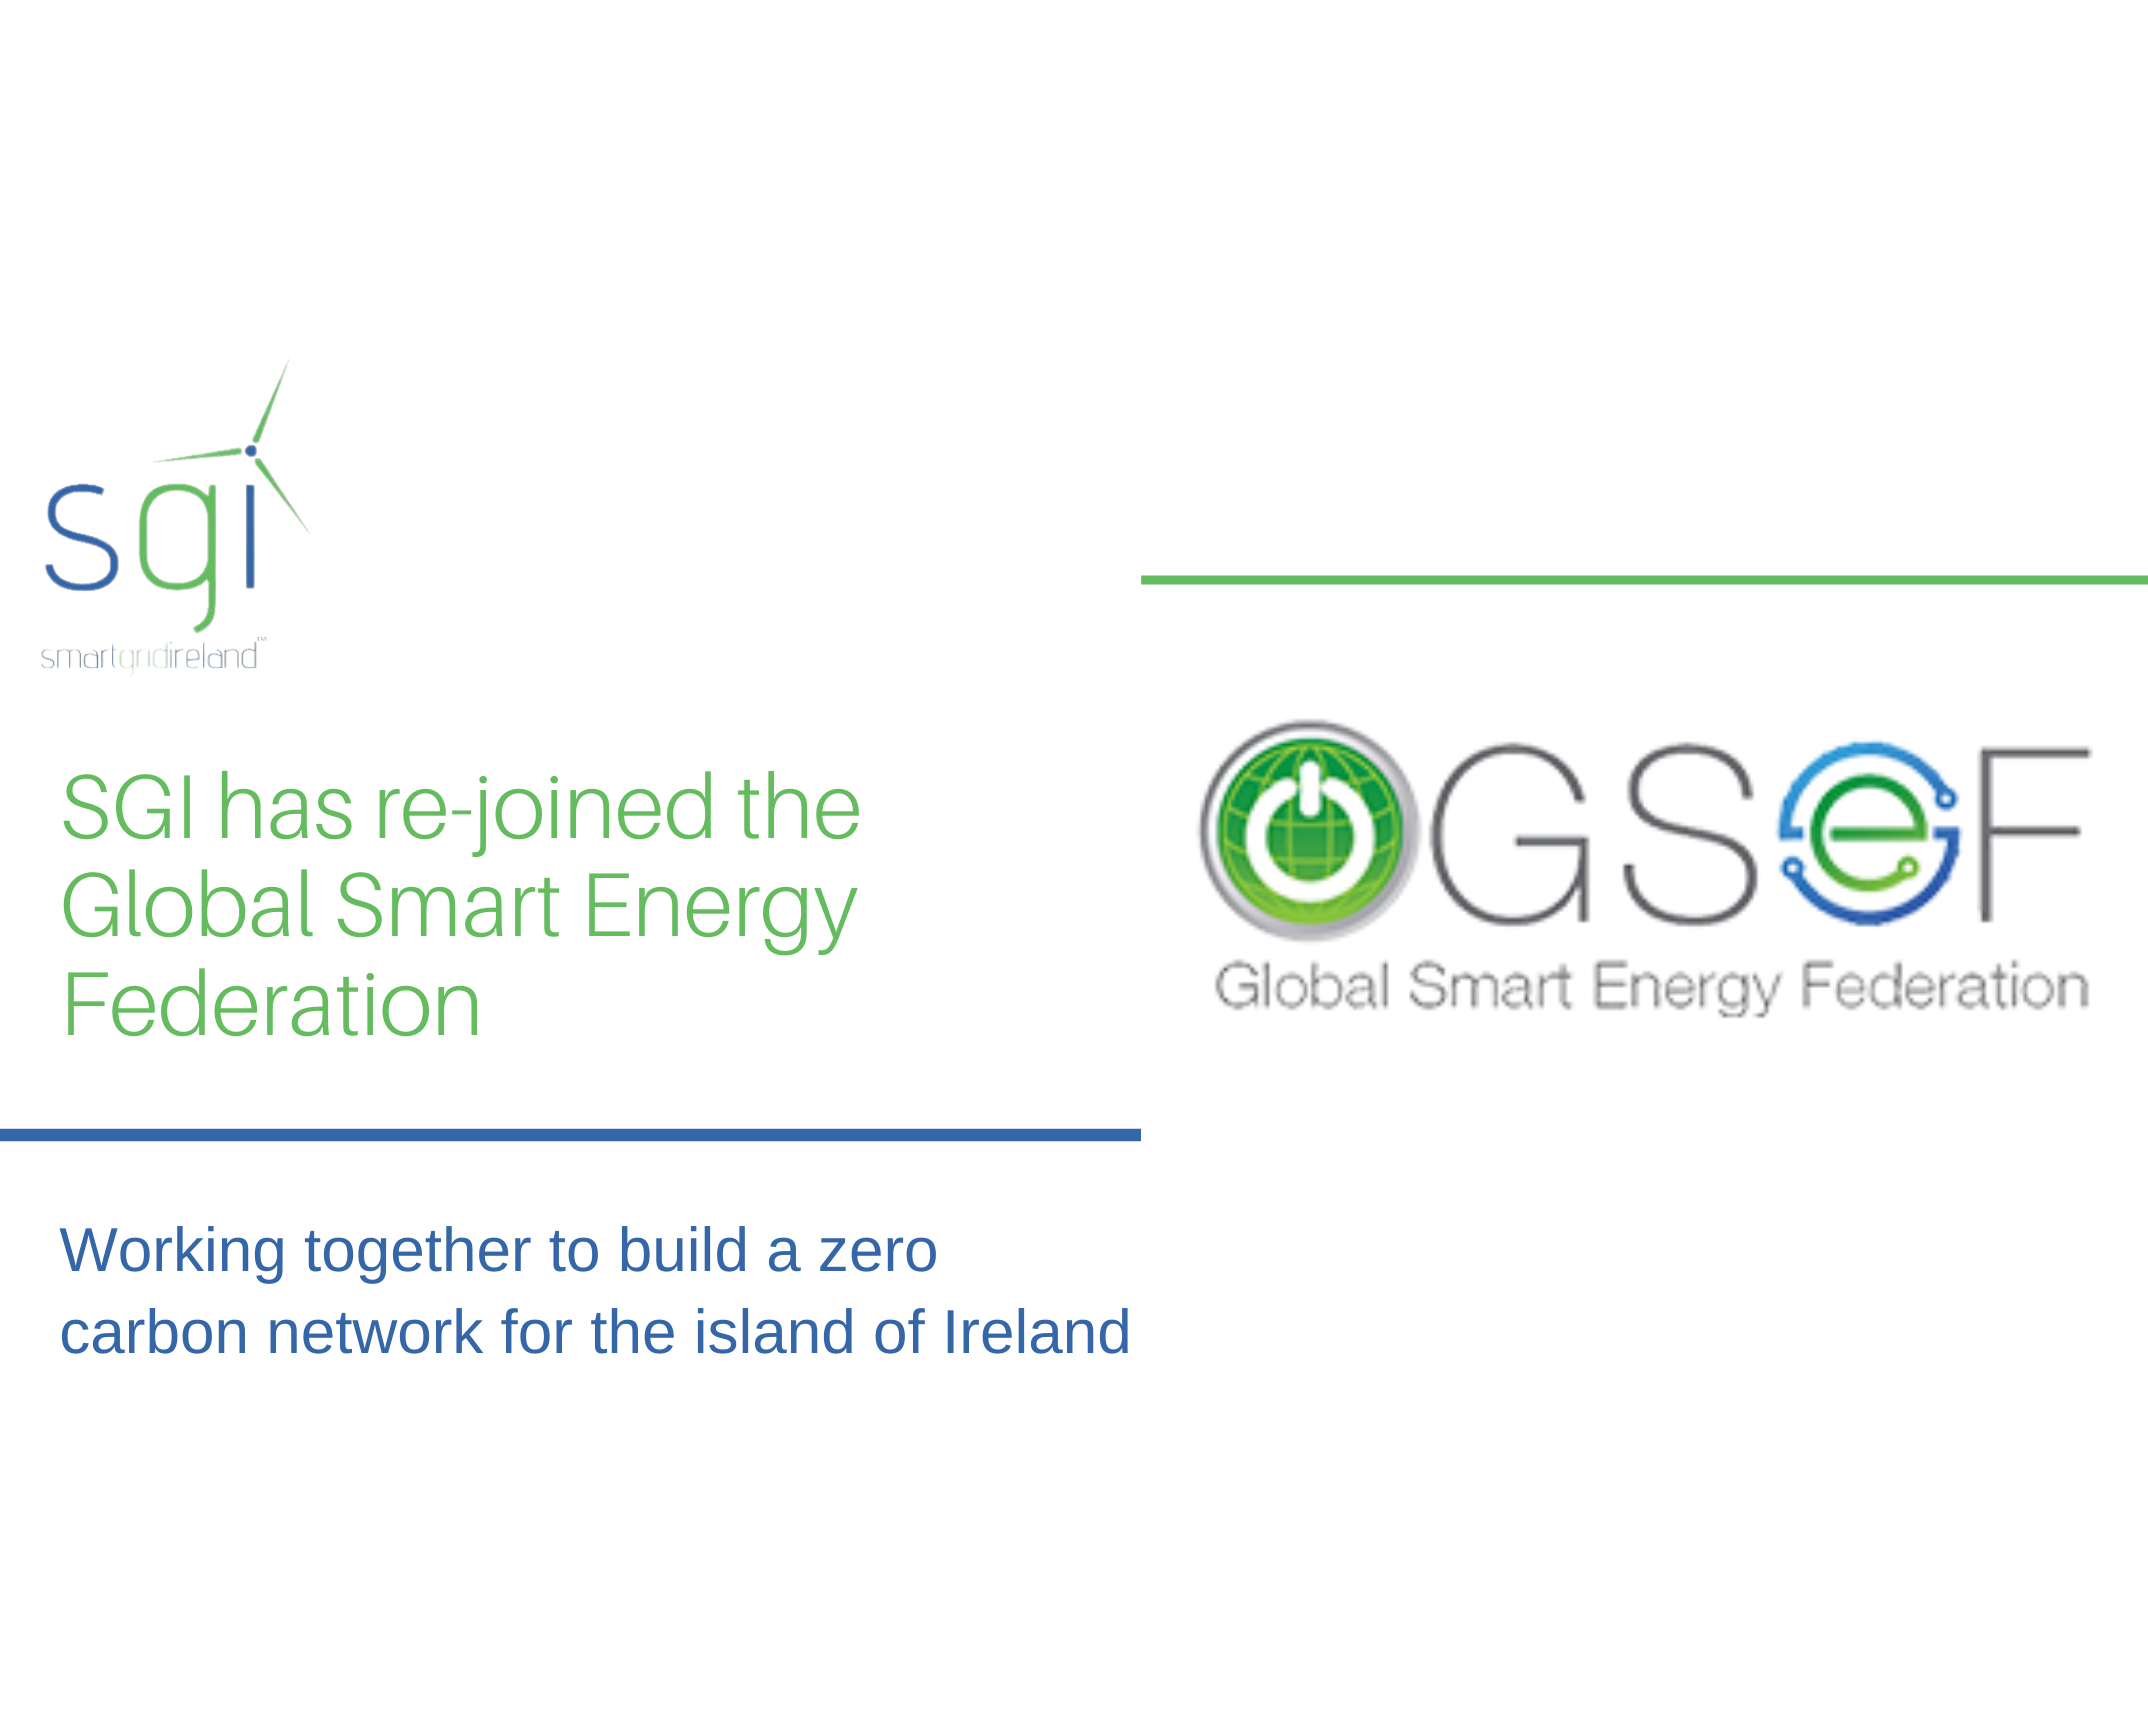 SGI are a member of GSEF